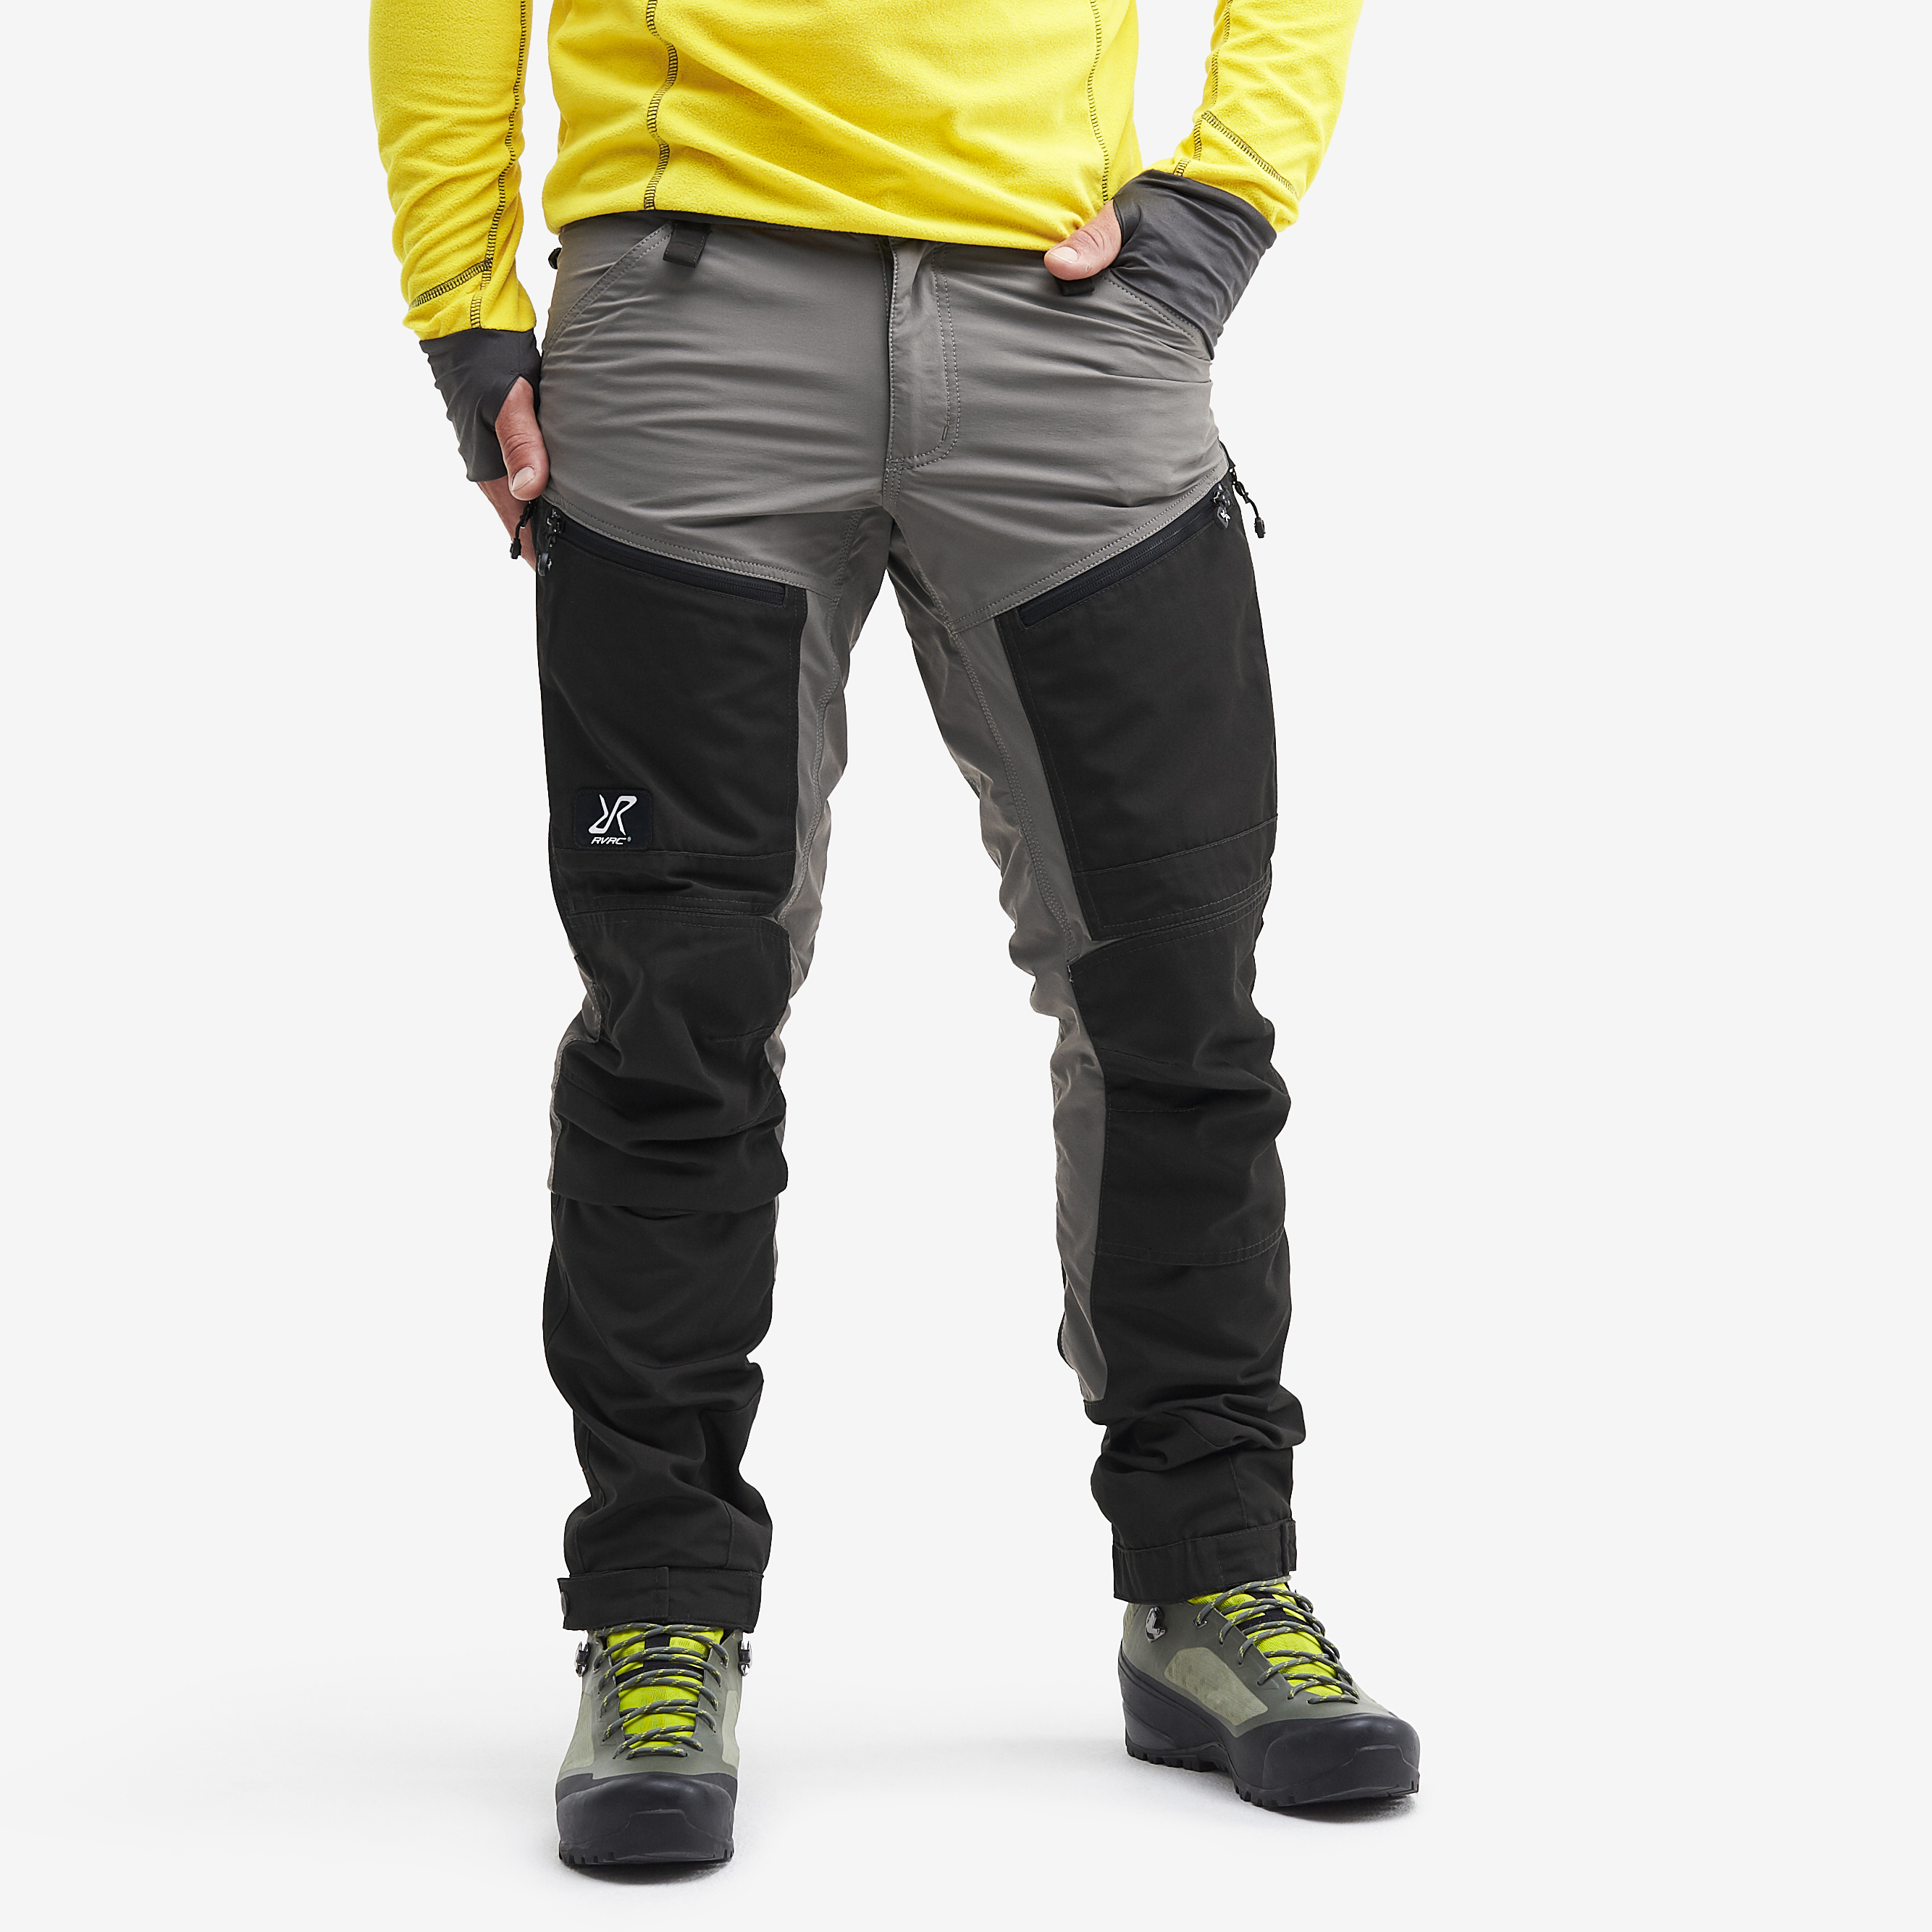 RVRC GP Pro hiking trousers for men in light grey